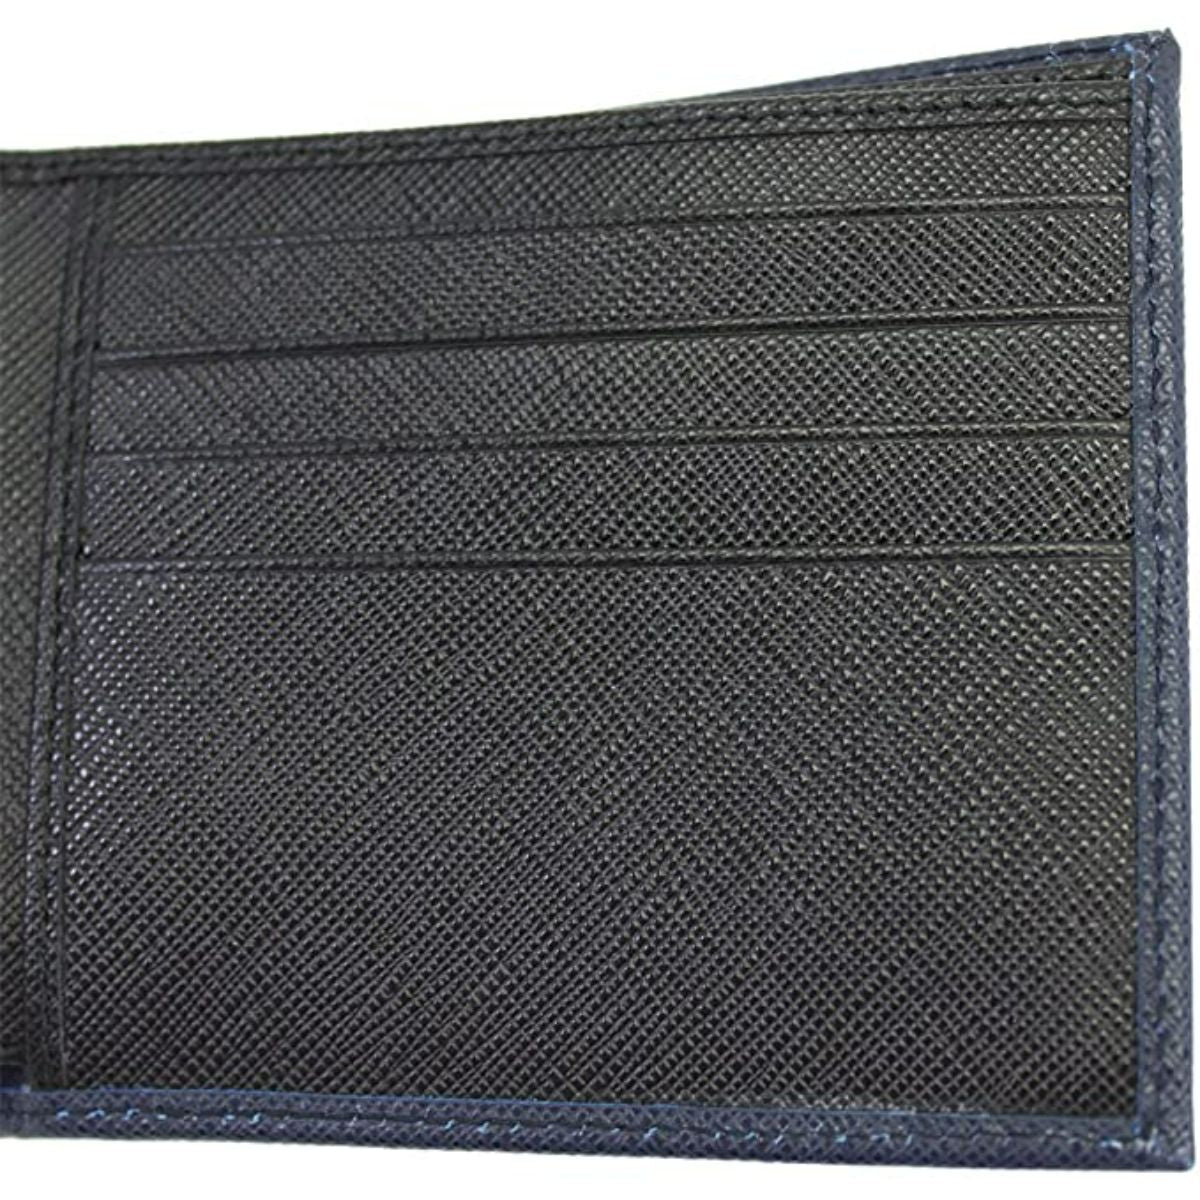 Prada Men's Blue Black Saffiano Cuir Leather Billfold Wallet 2M0513 at_Queen_Bee_of_Beverly_Hills